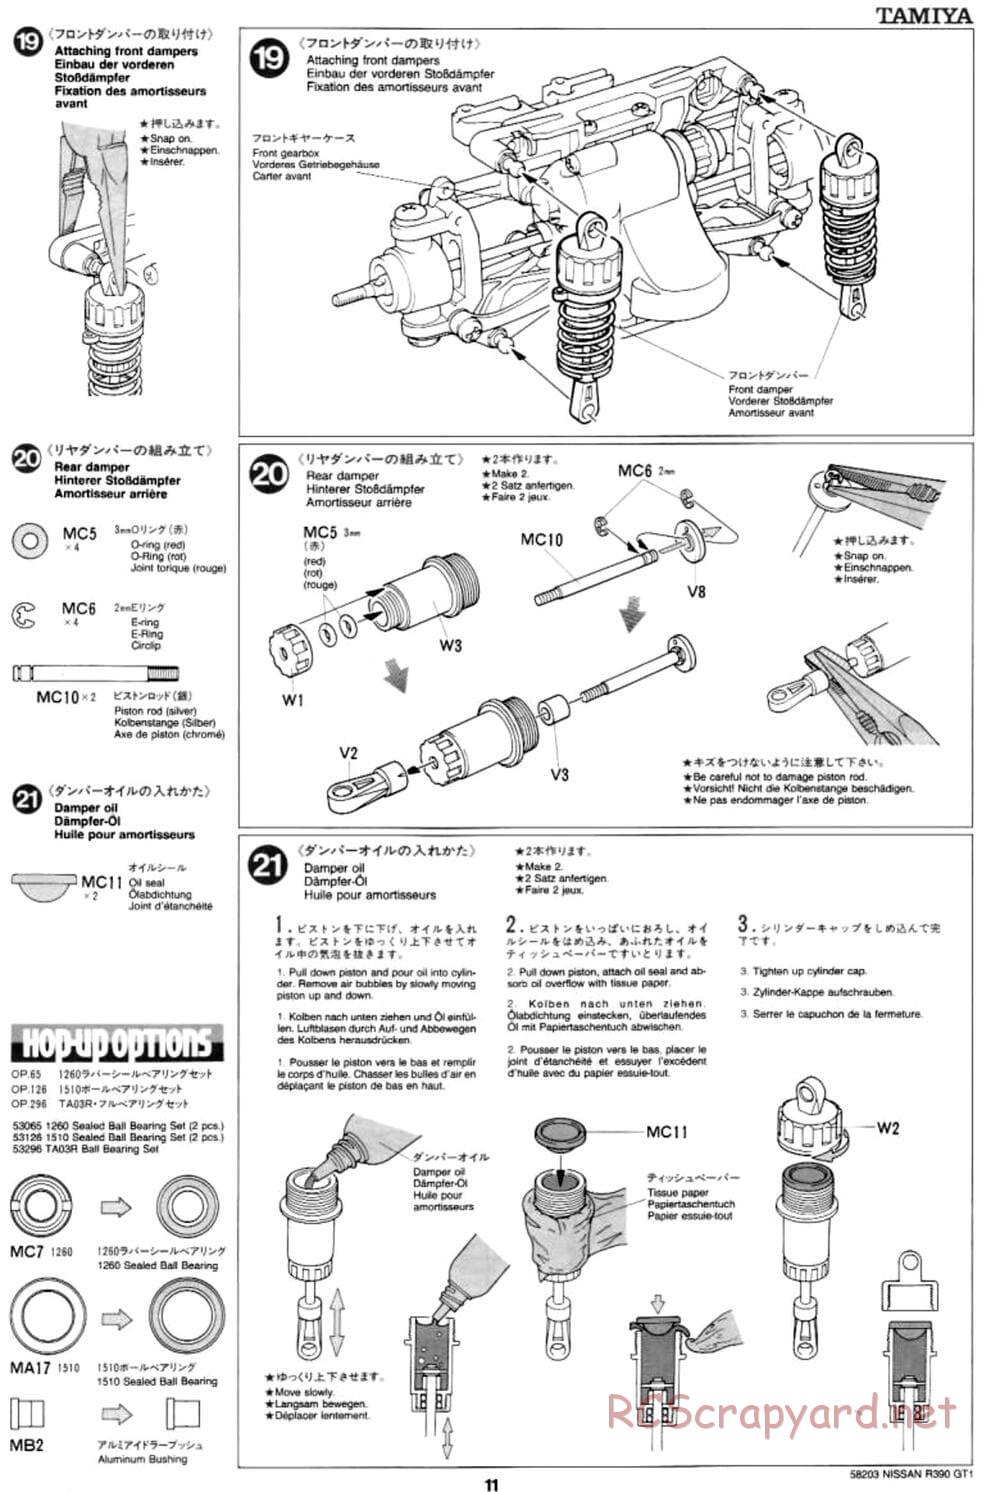 Tamiya - Nissan R390 GT1 - TA-03R Chassis - Manual - Page 11